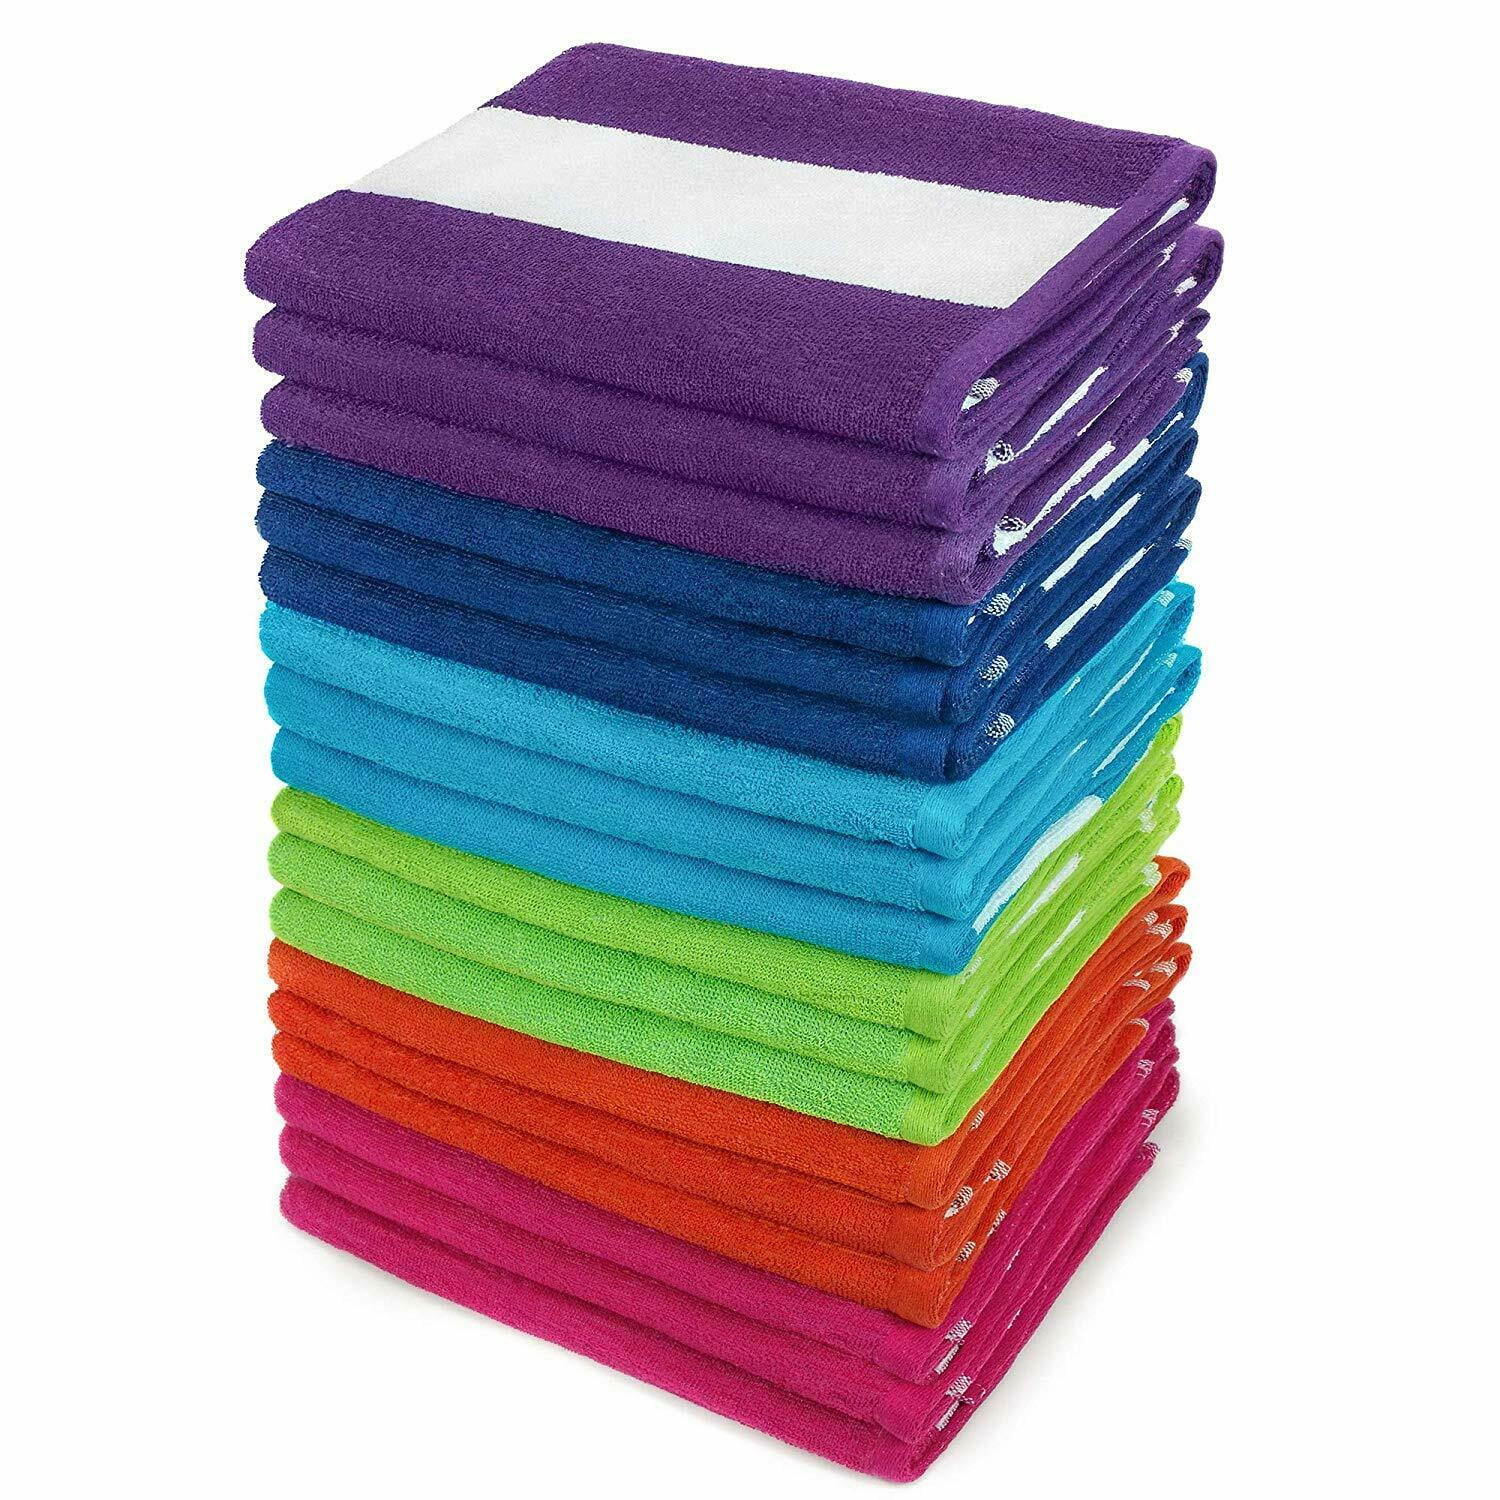 Ben Kaufman 100% Cotton Velour Towels - Large Cotton Towels - Soft &  Absorbant - Assorted Striped Colors - 30” x 60” - 4 Pack